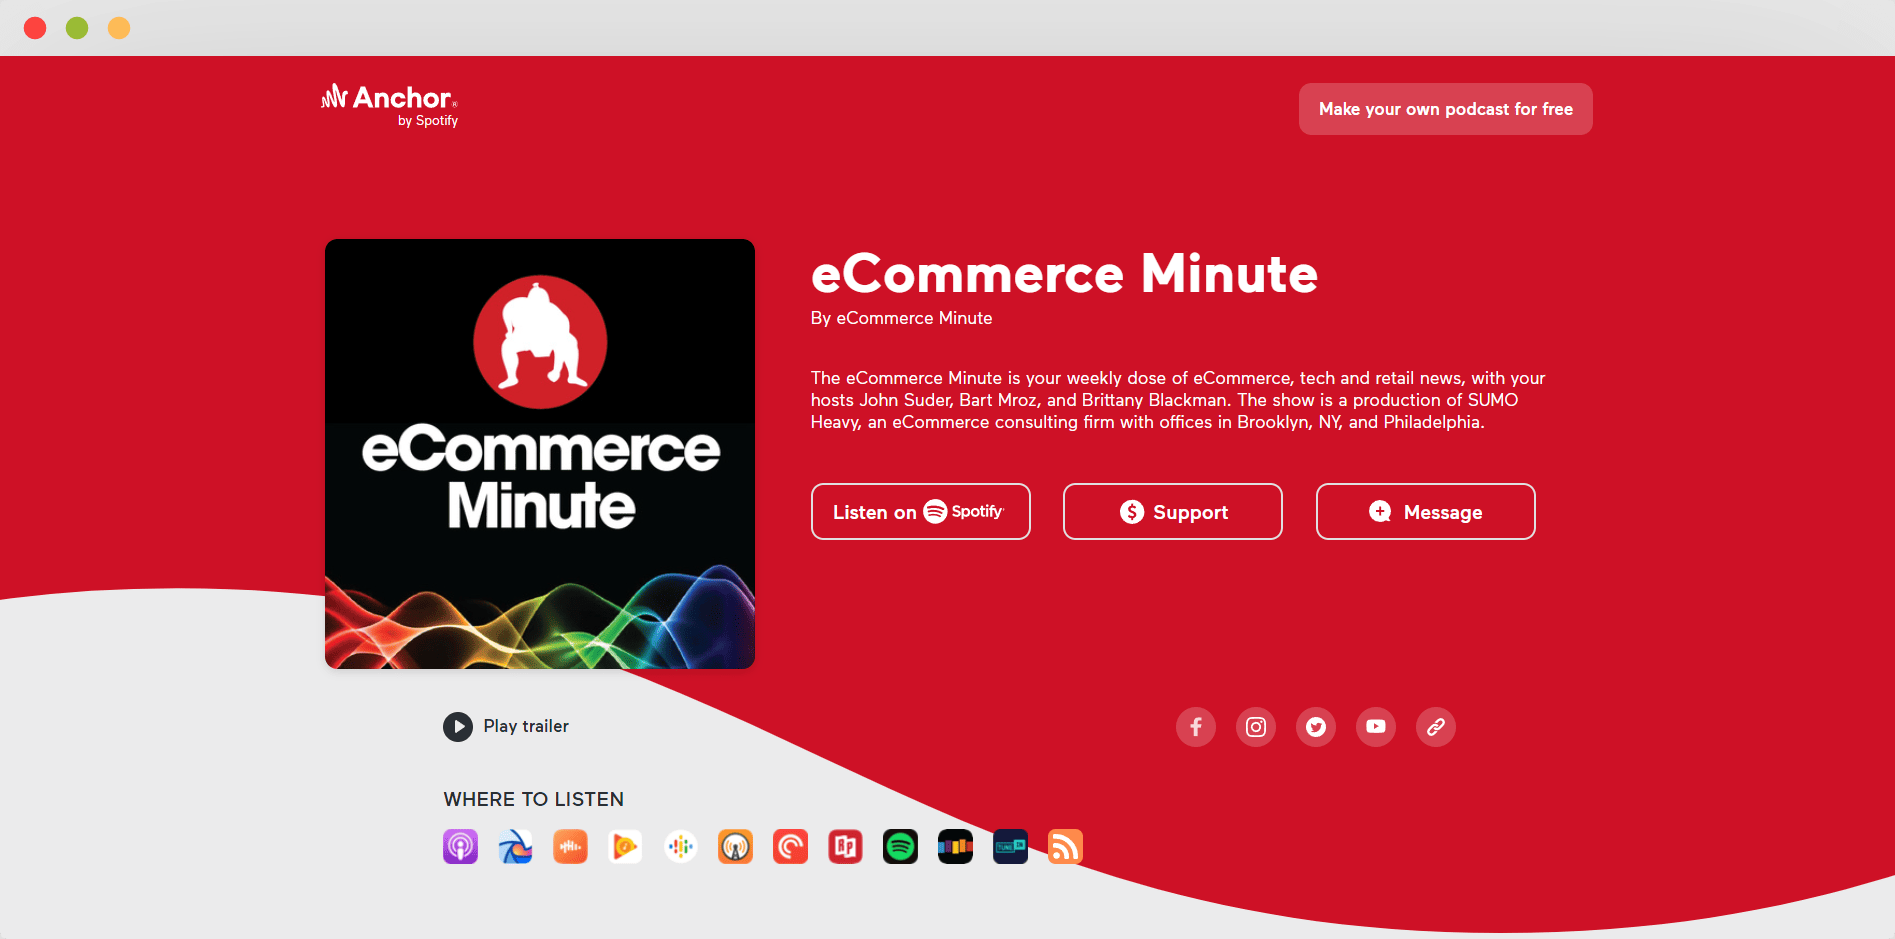 eCommerce Minute